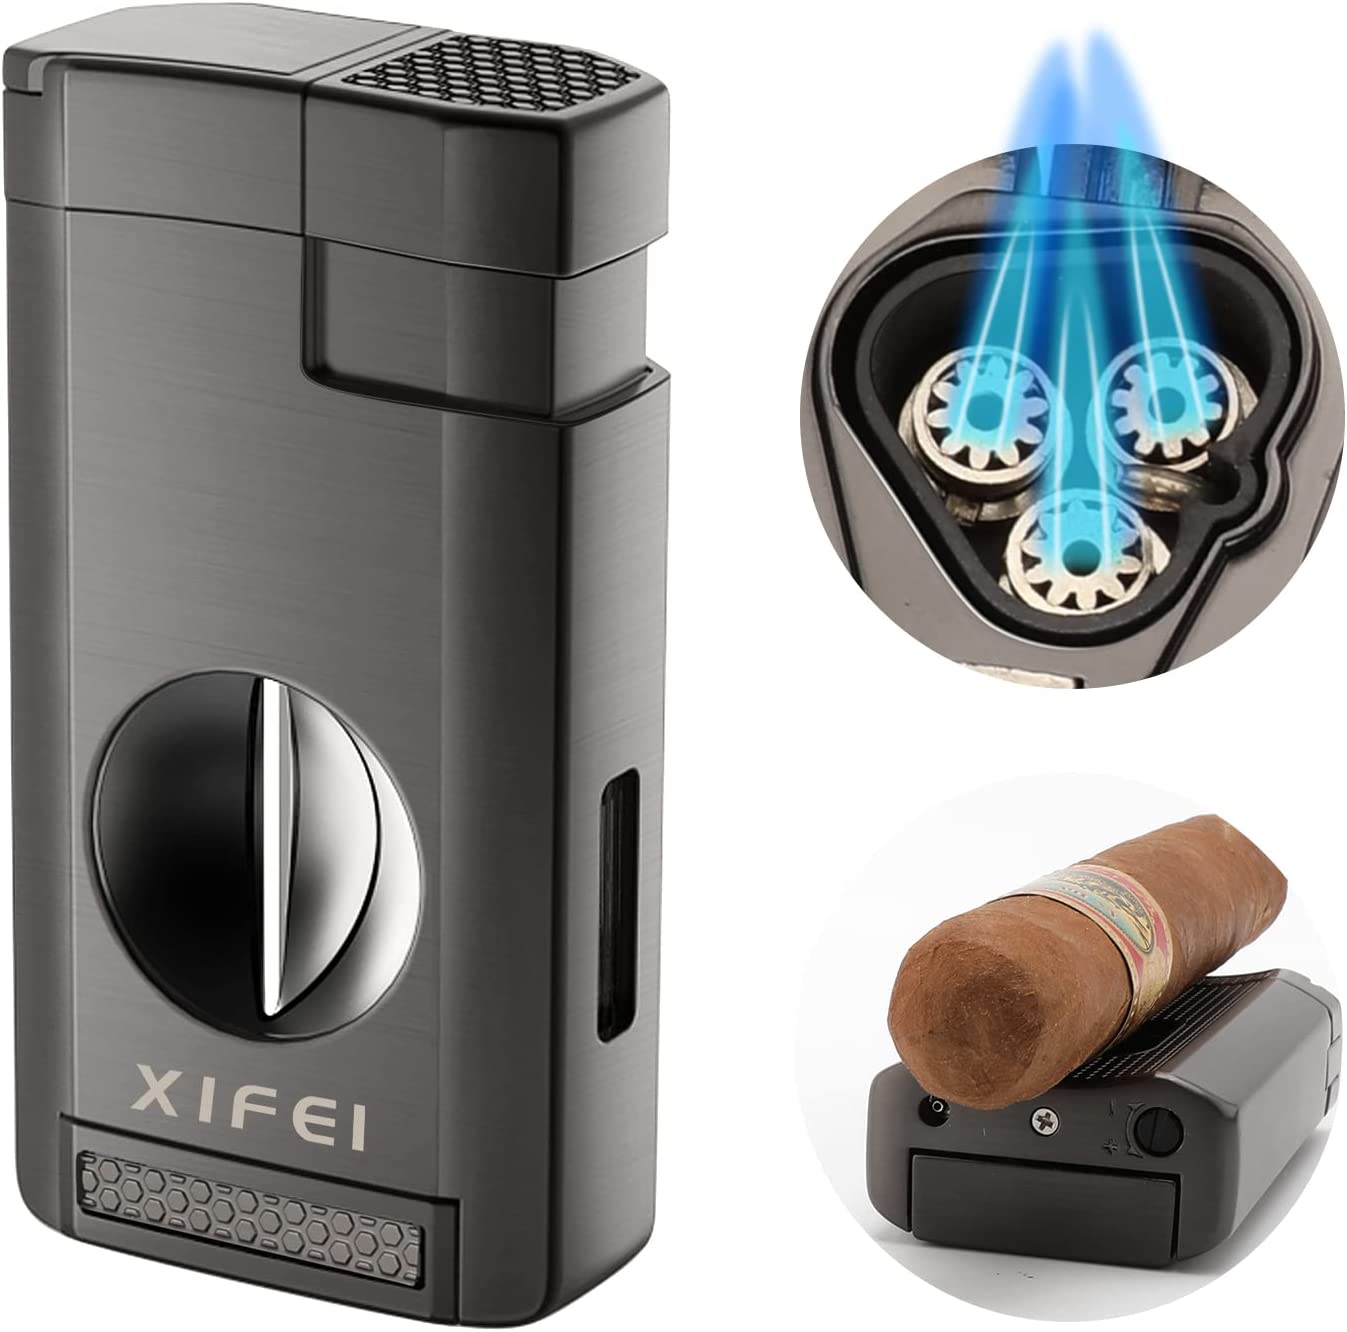 XIFEI Cigar Lighter 4 Jet Flame Torch Lighter with Cigar Holder, Windproof  Rocker Arm Lighter Adjustable Flame, Refillable Butane Lighter Smoking